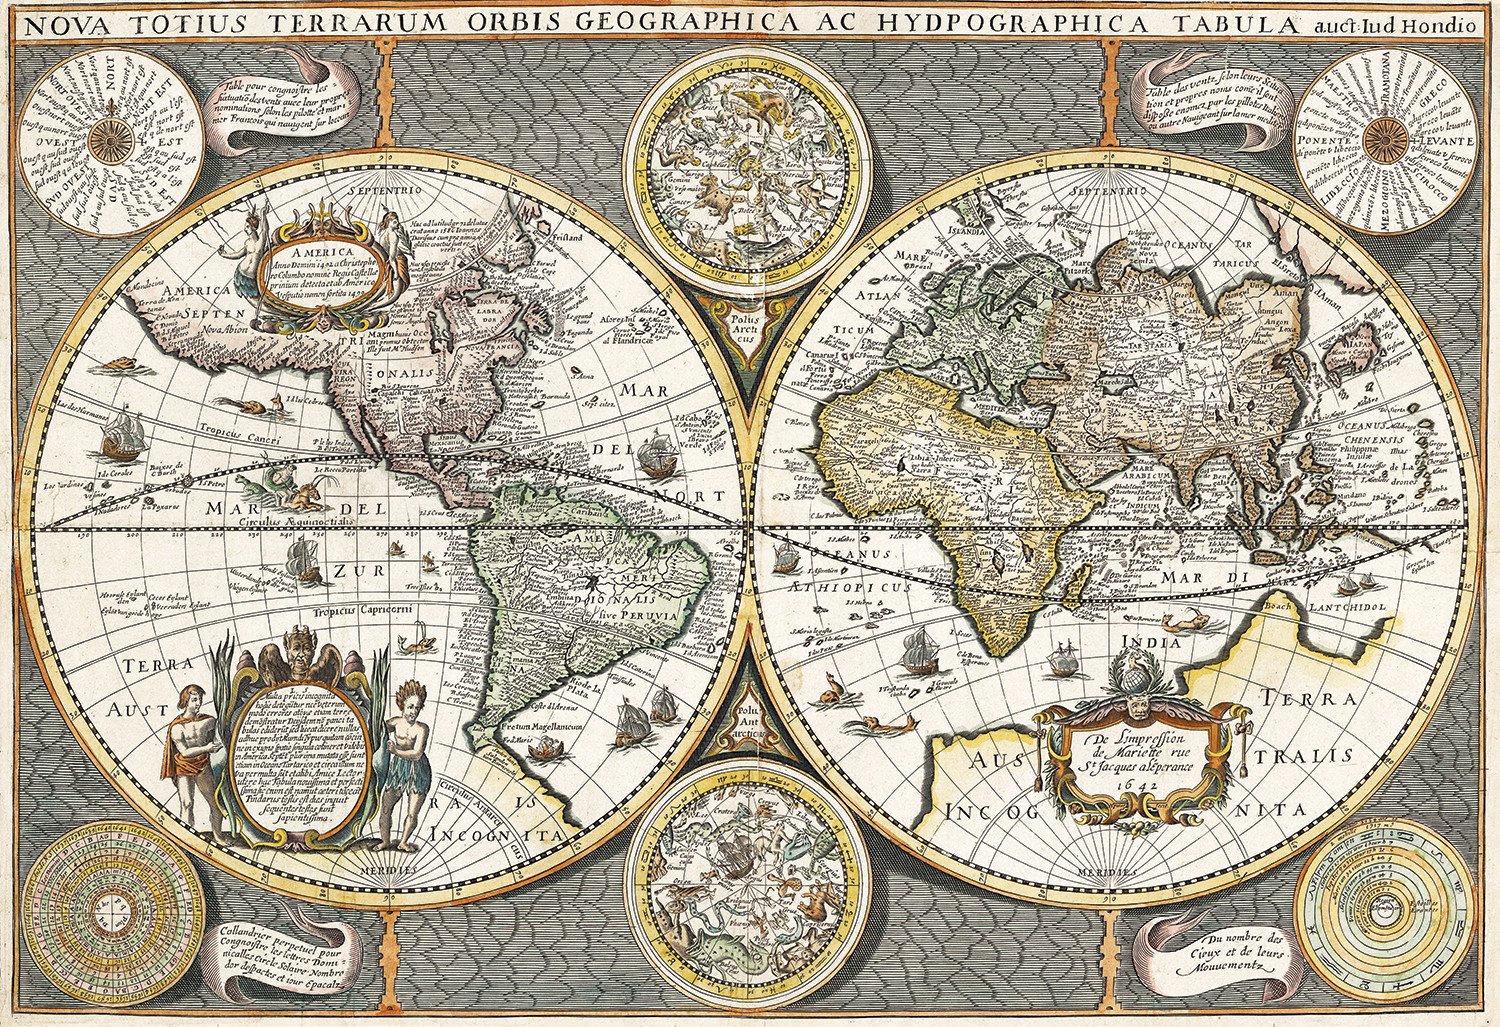 Nova totius Terrarum Orbis Geographica AC Hydrographica tabula карта